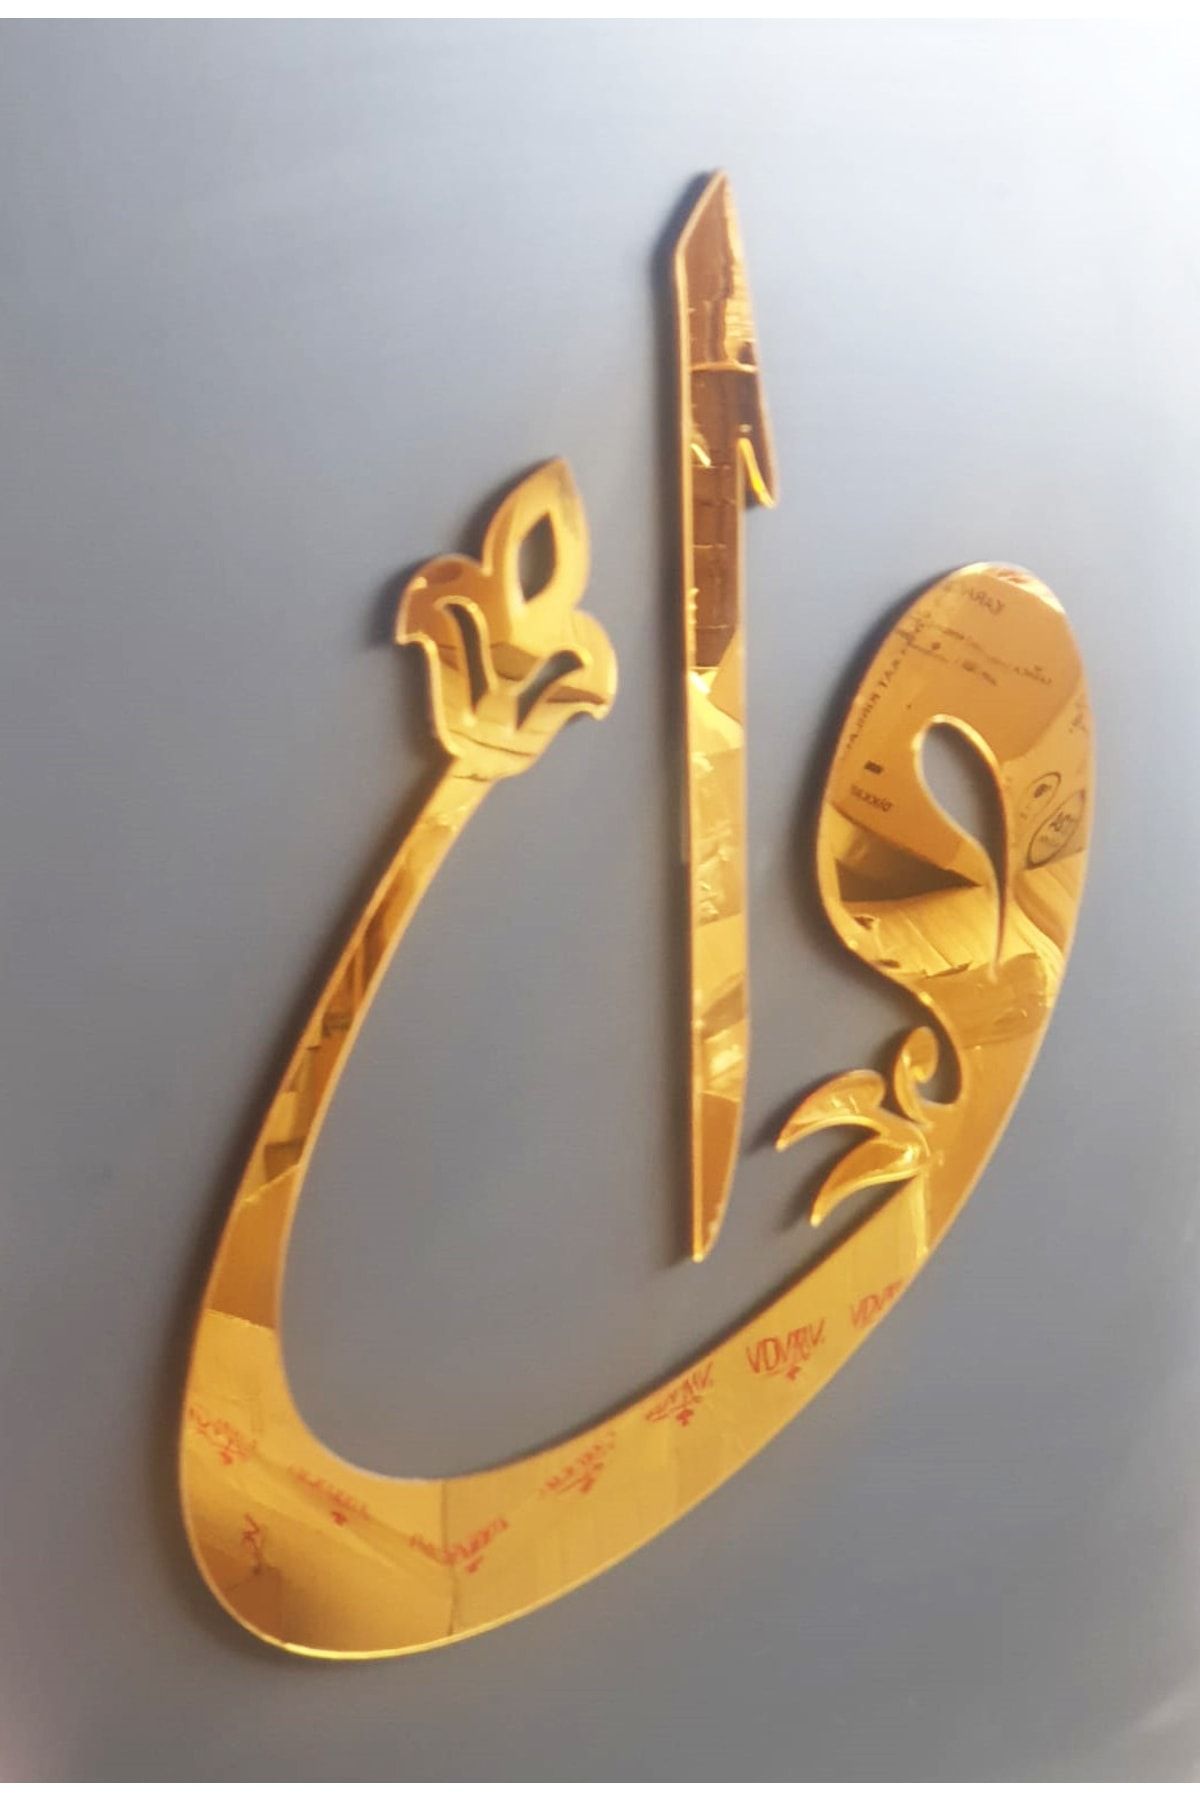 GİZEM SHOP 3d Vav Elif Gold Ayna Pleksi 35x30cm Islami Duvar Tablosu